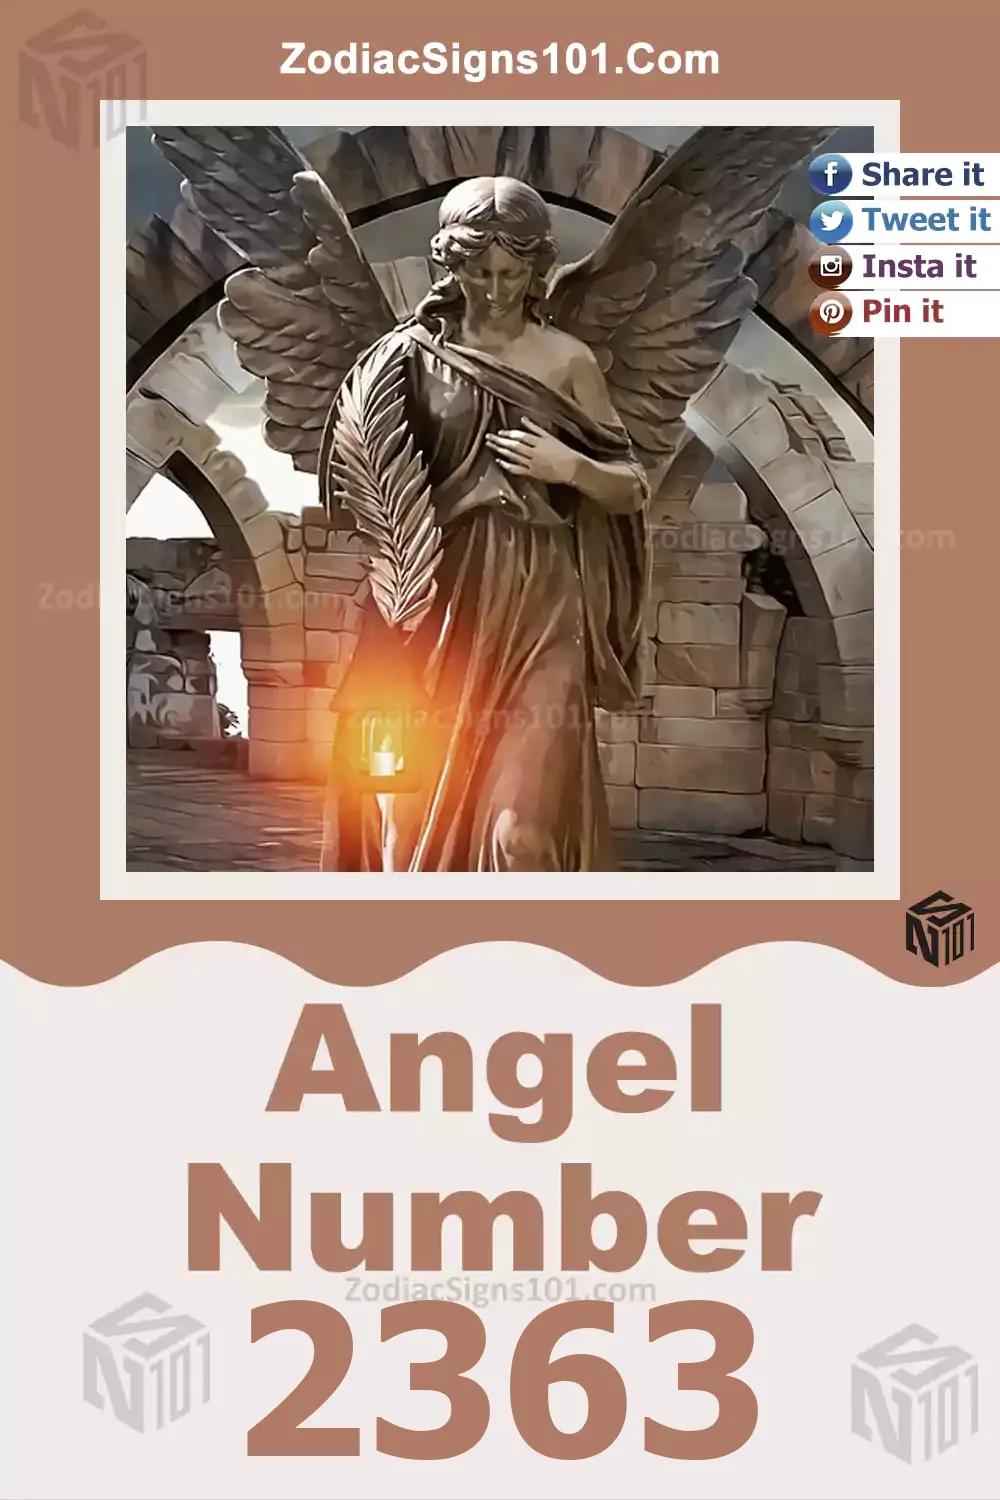 2363-Angel-Number-Meaning.jpg